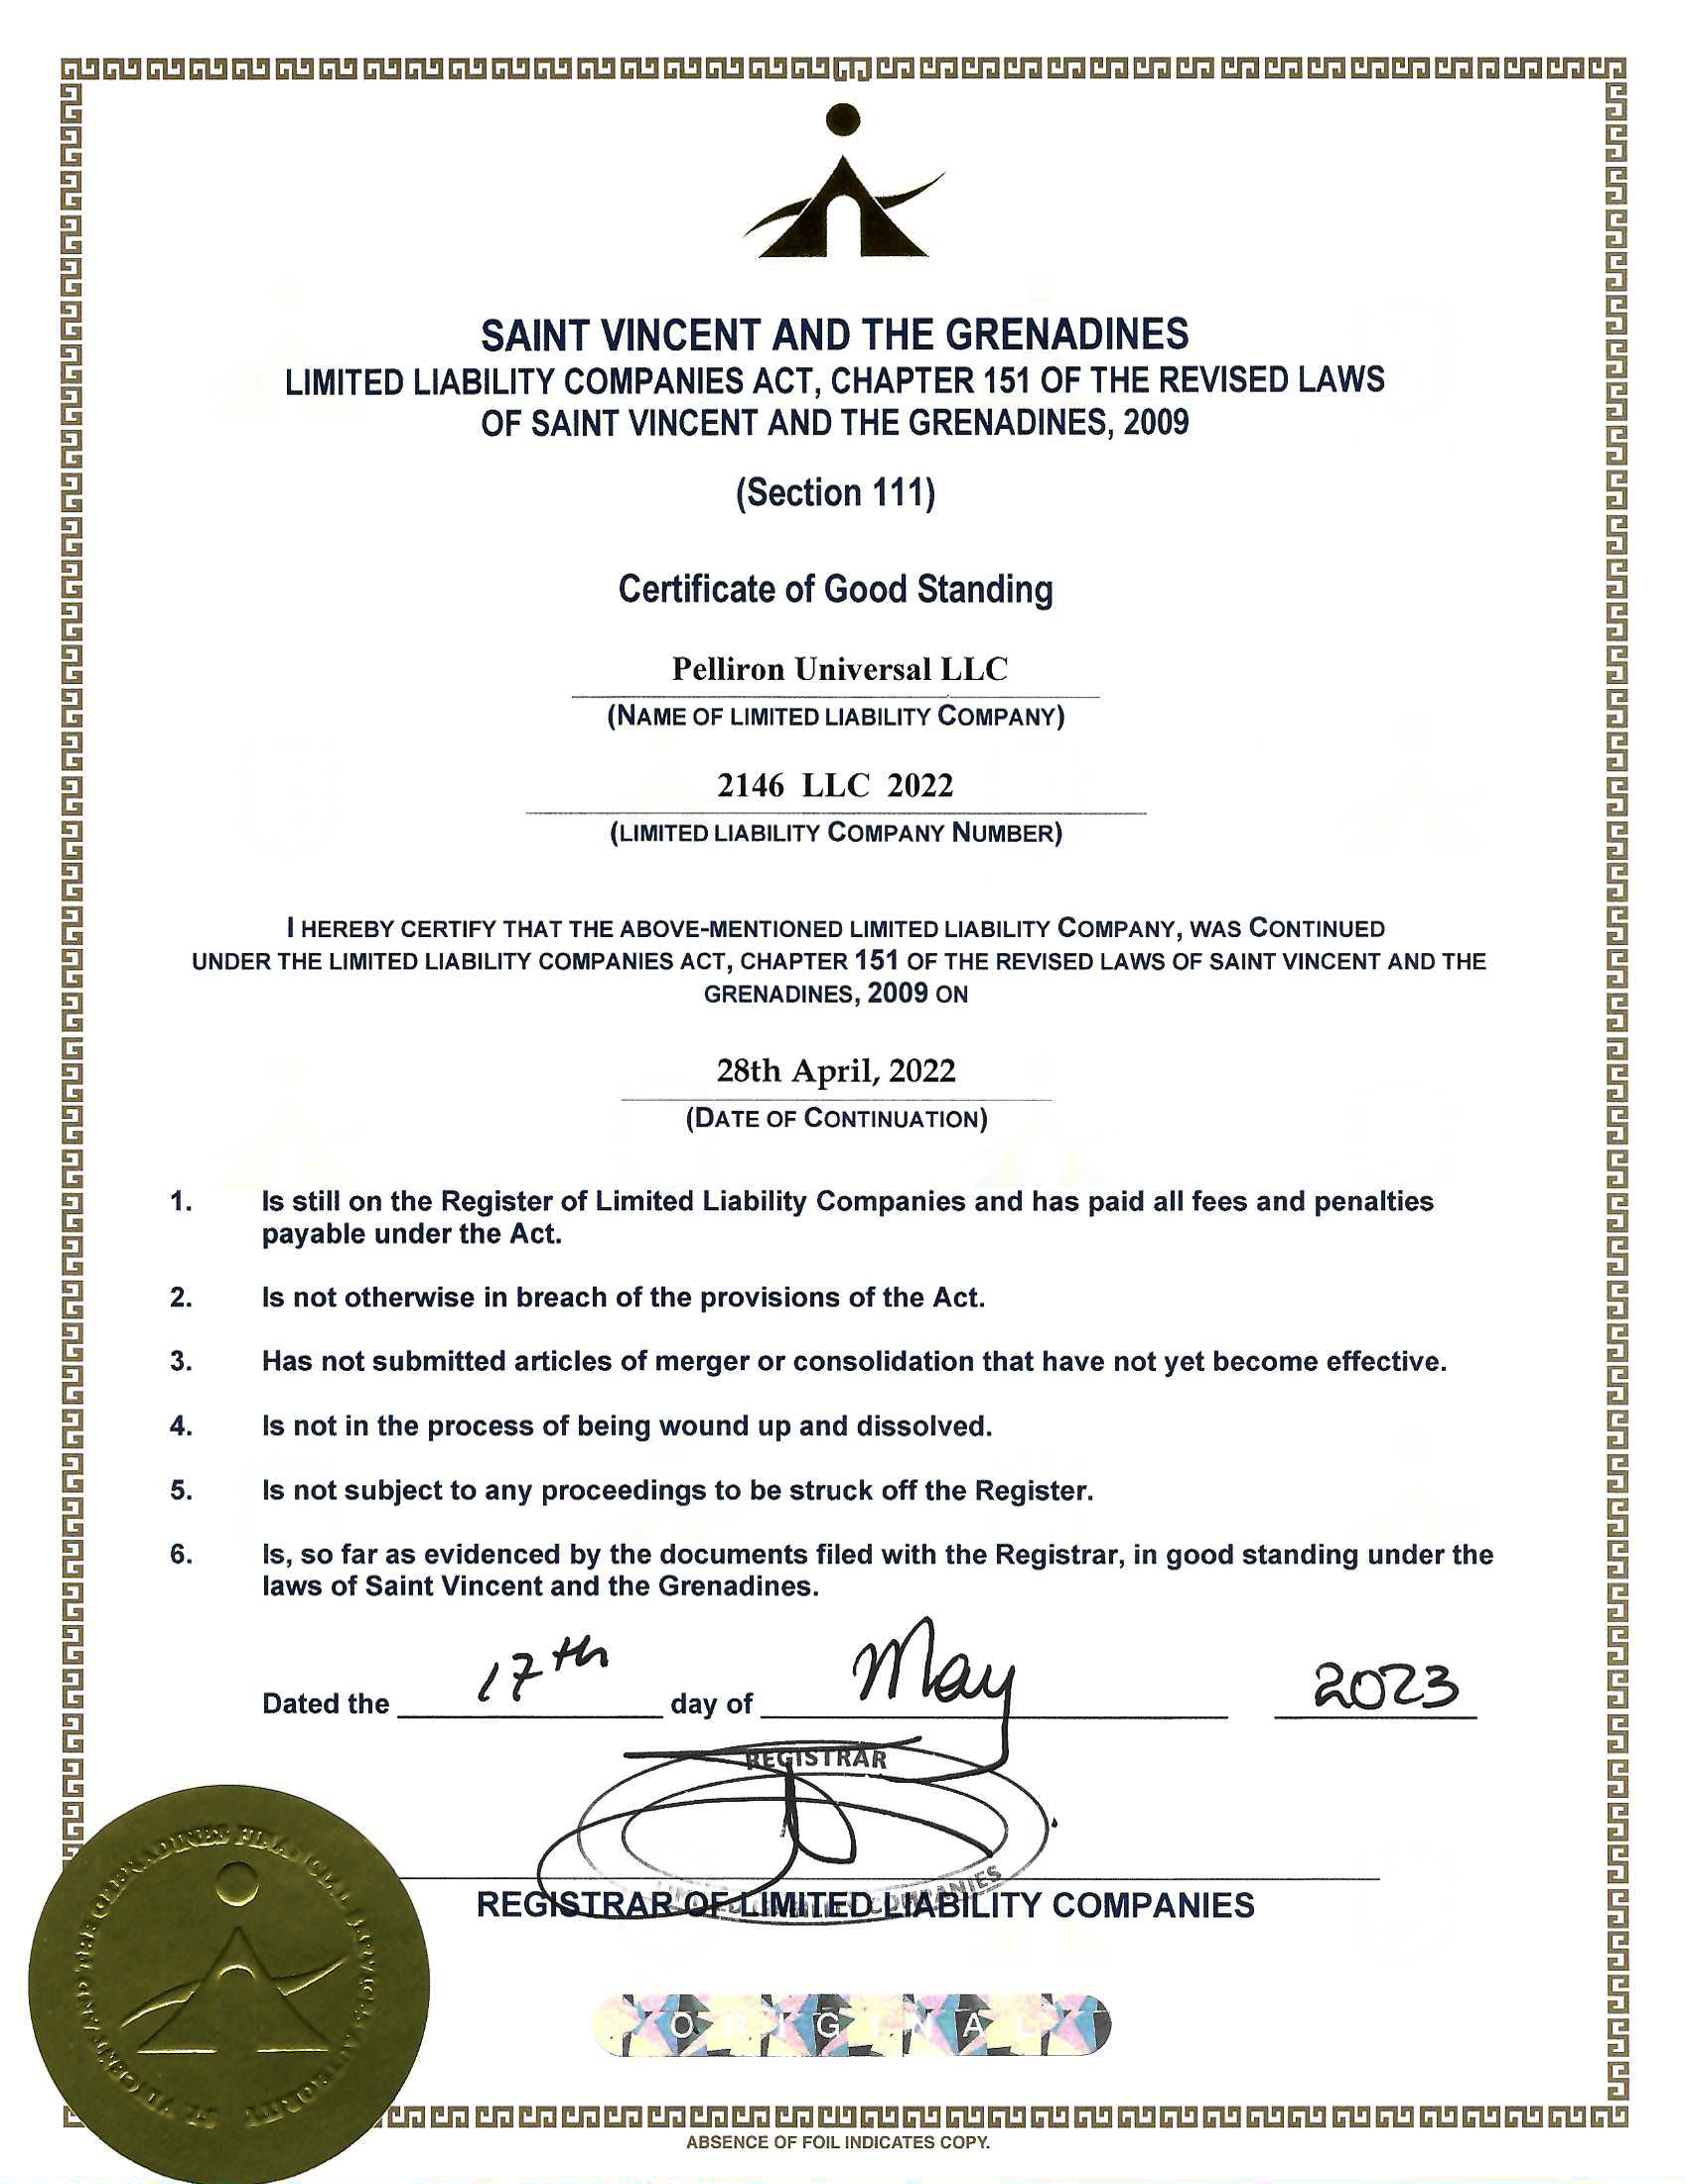 International Certificate 2023